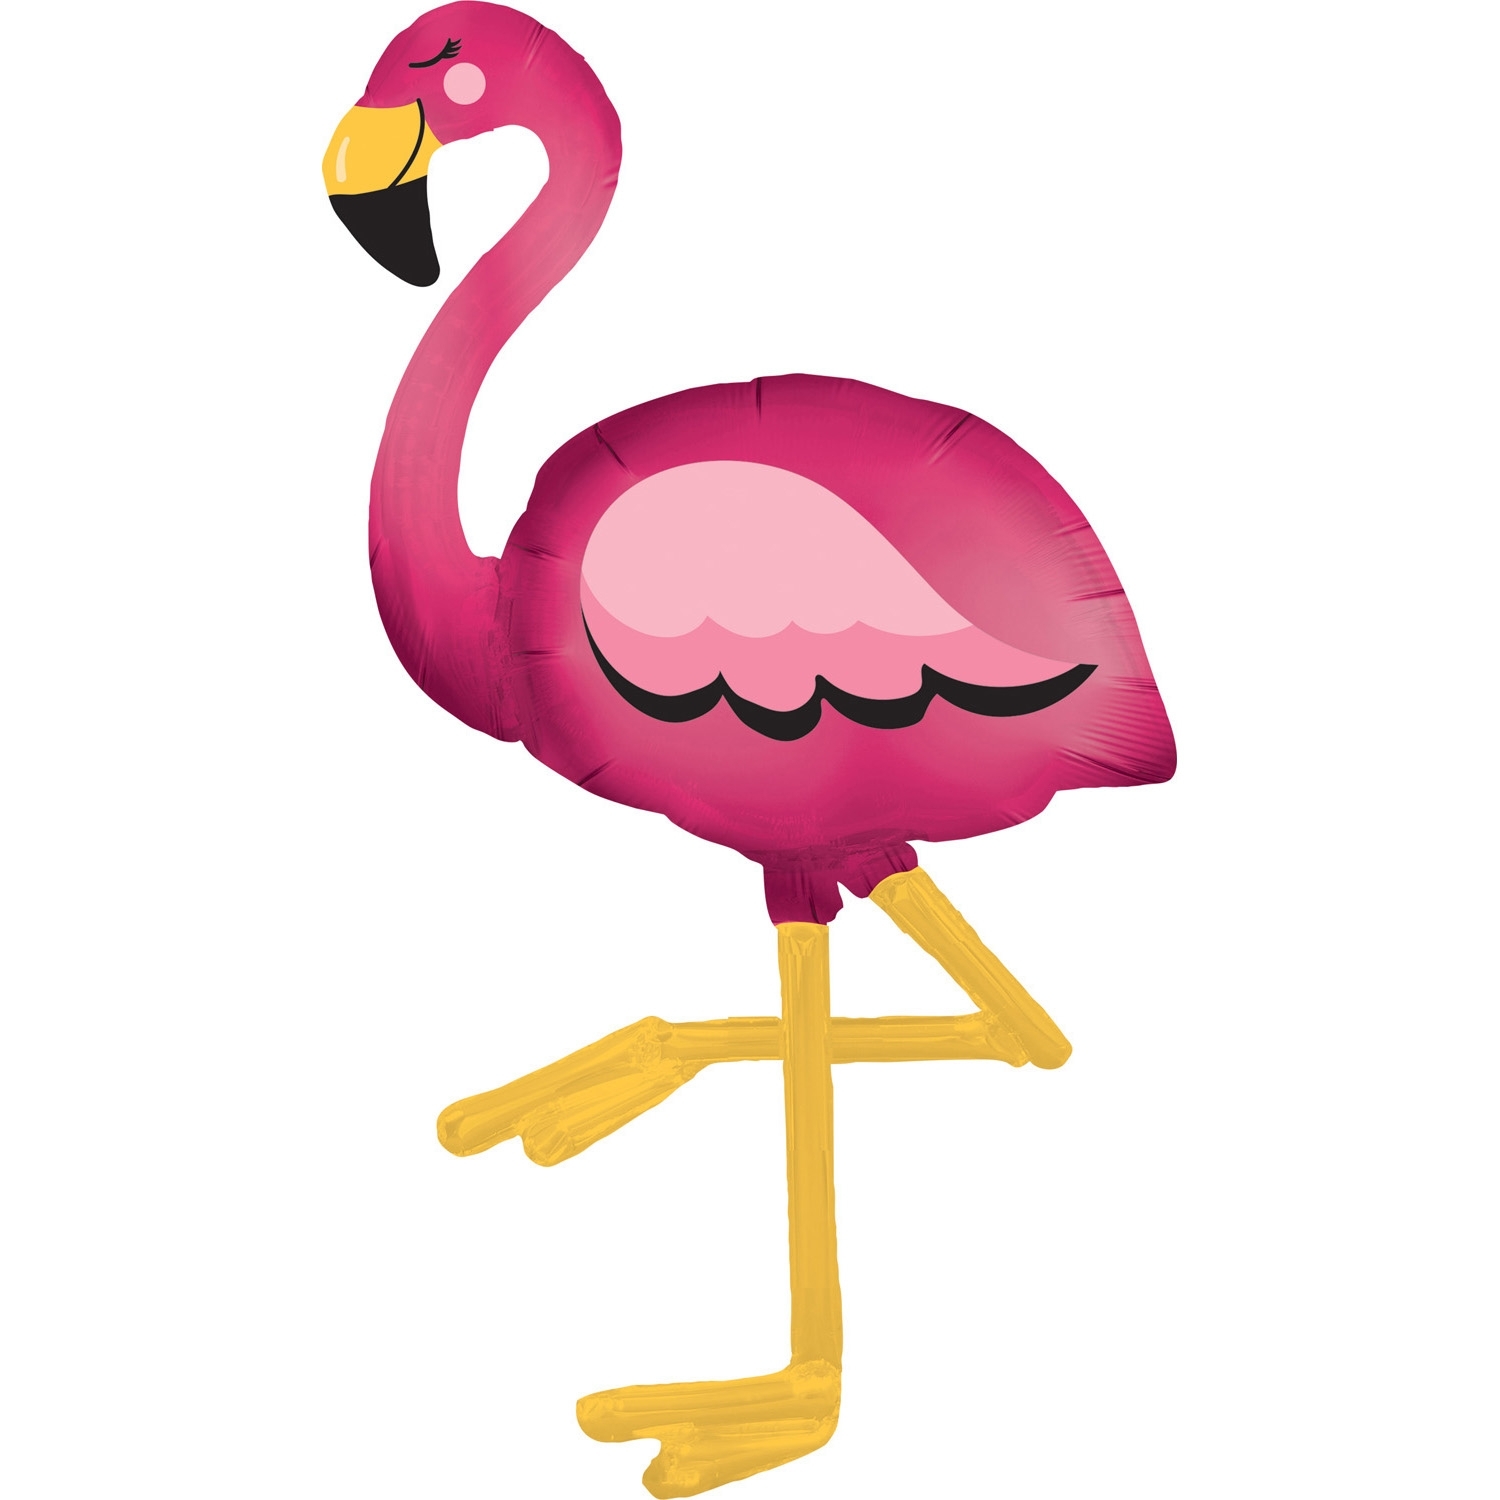 Airwalker "Flamingo" Satin Pink 172 x 86cm